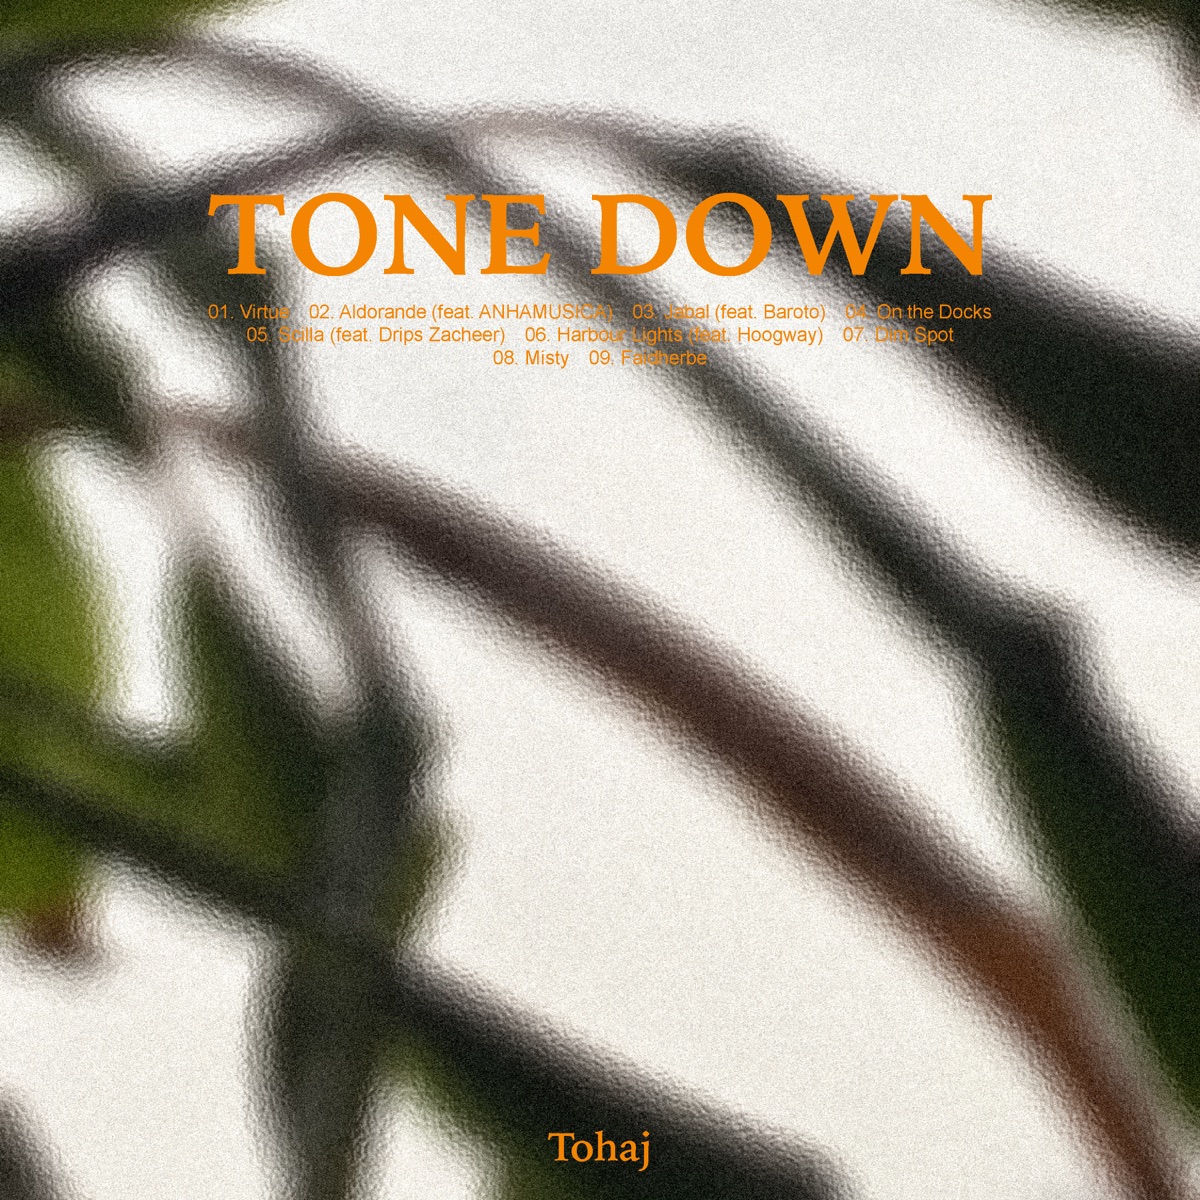 Tone Down – Album par Tohaj – Apple Music